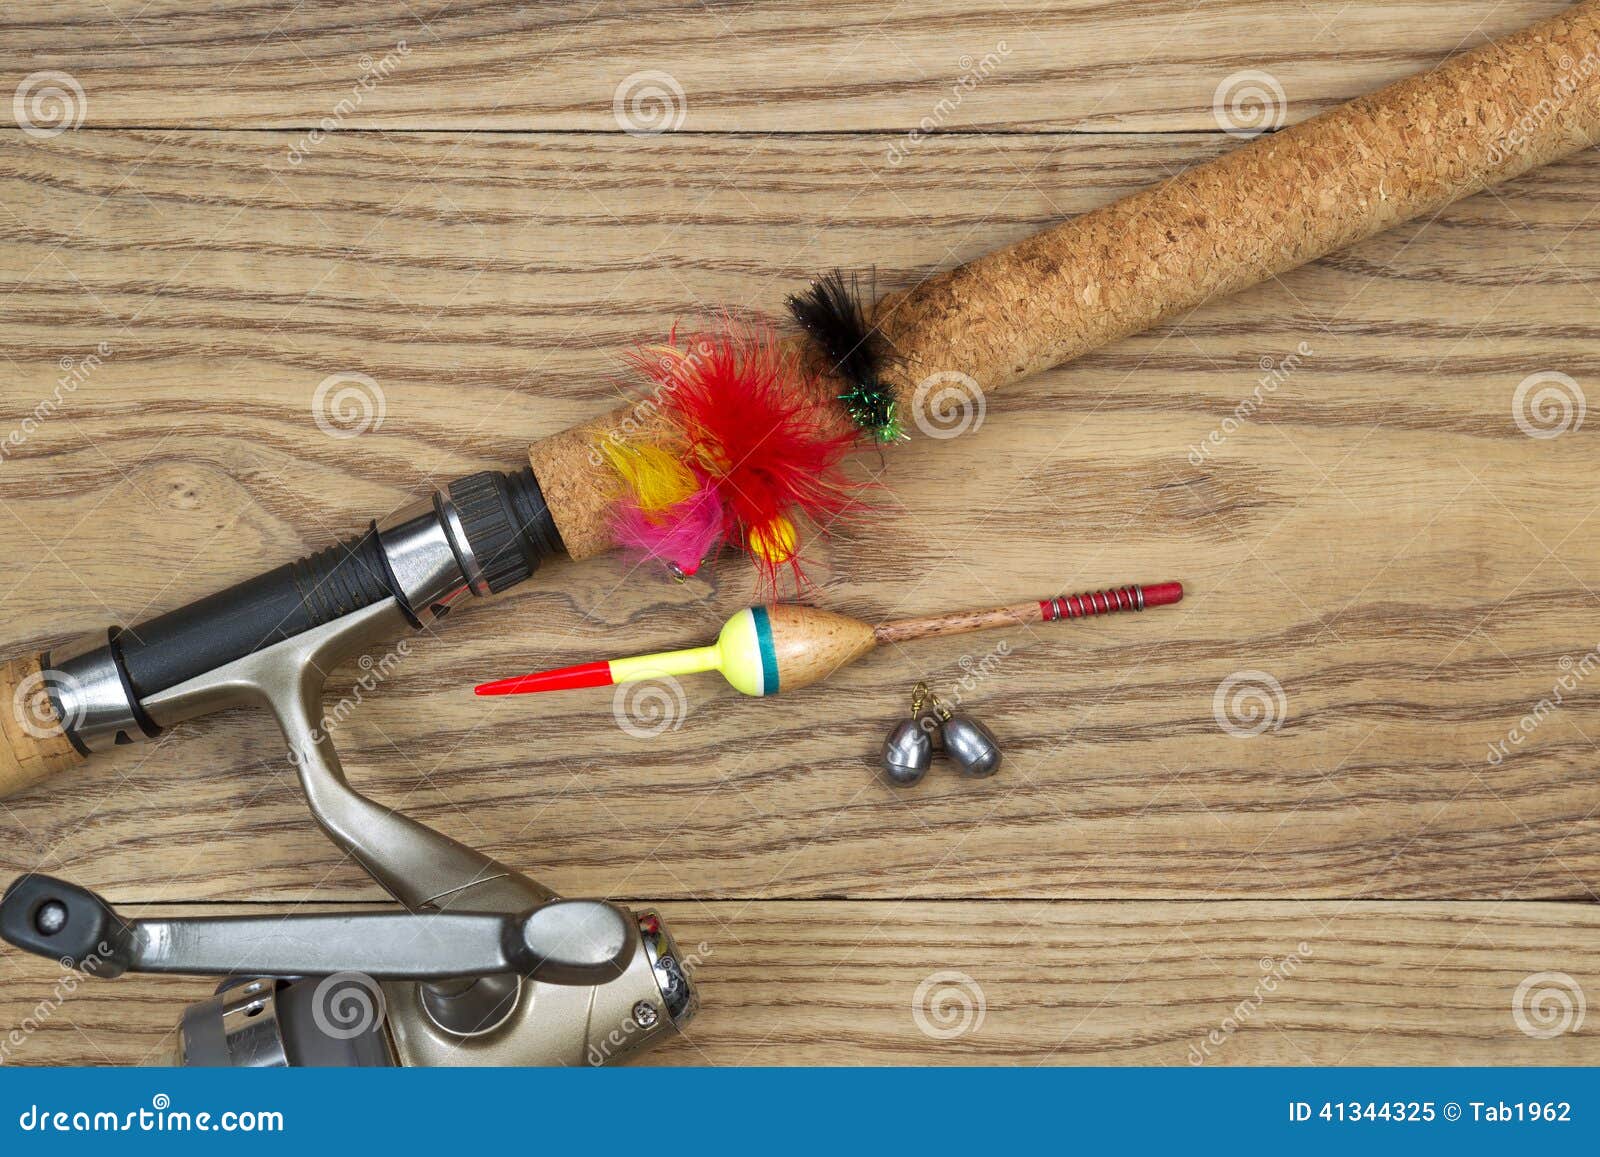 https://thumbs.dreamstime.com/z/fishing-equipment-old-wood-horizontal-top-view-photo-lures-bobbers-sinkers-cork-pole-handle-part-reel-faded-41344325.jpg